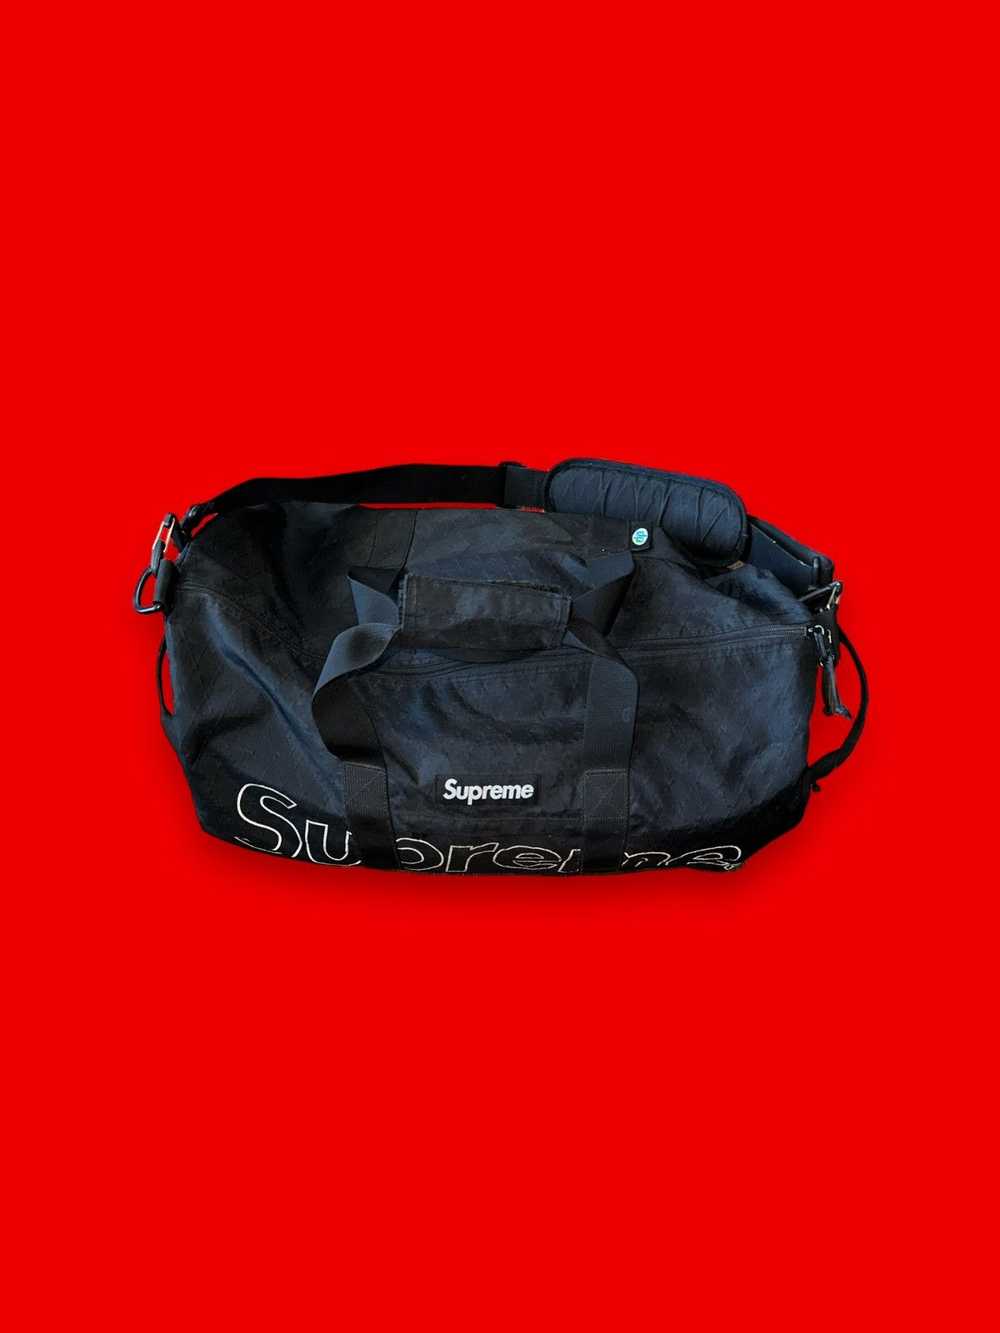 Supreme Supreme duffel bag - image 2